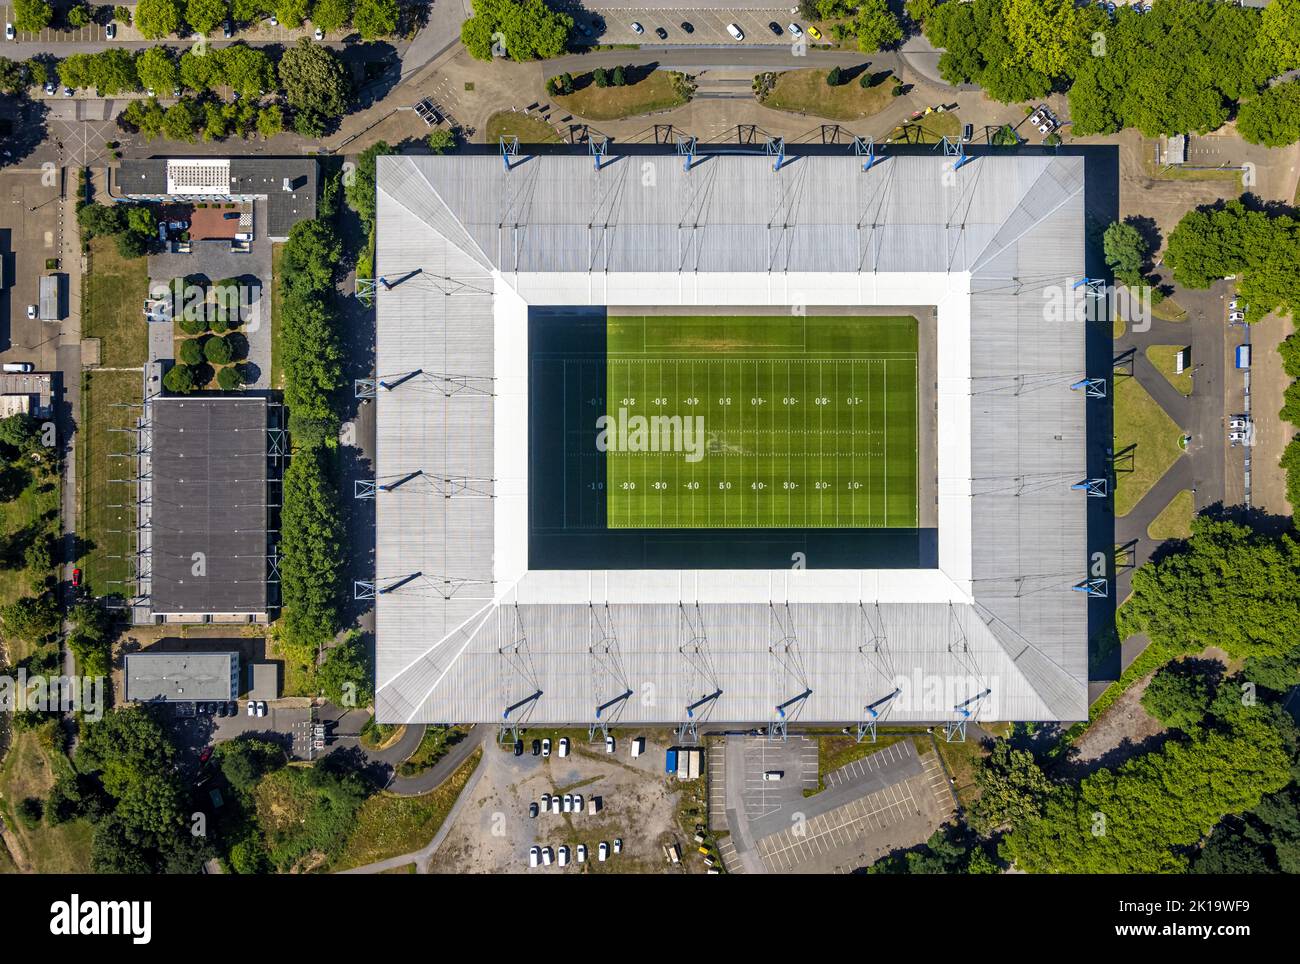 Aerial view, MSV Arena, Schauinsland-Reisen-Arena, soccer stadium, vertical view, Neudorf, Duisburg, Ruhr area, North Rhine-Westphalia, Germany, Arena Stock Photo